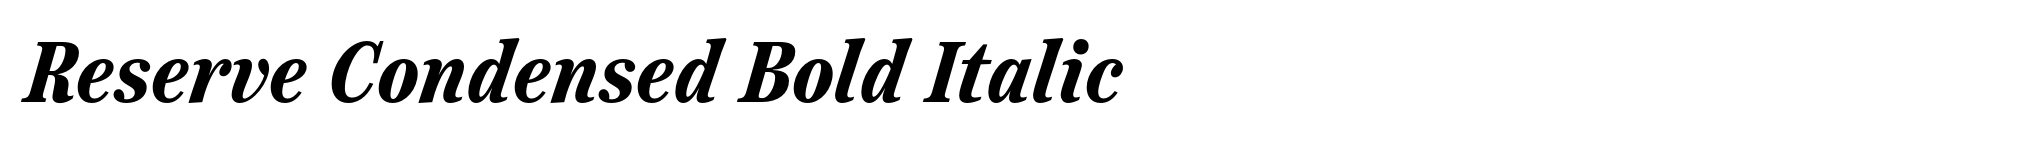 Reserve Condensed Bold Italic image